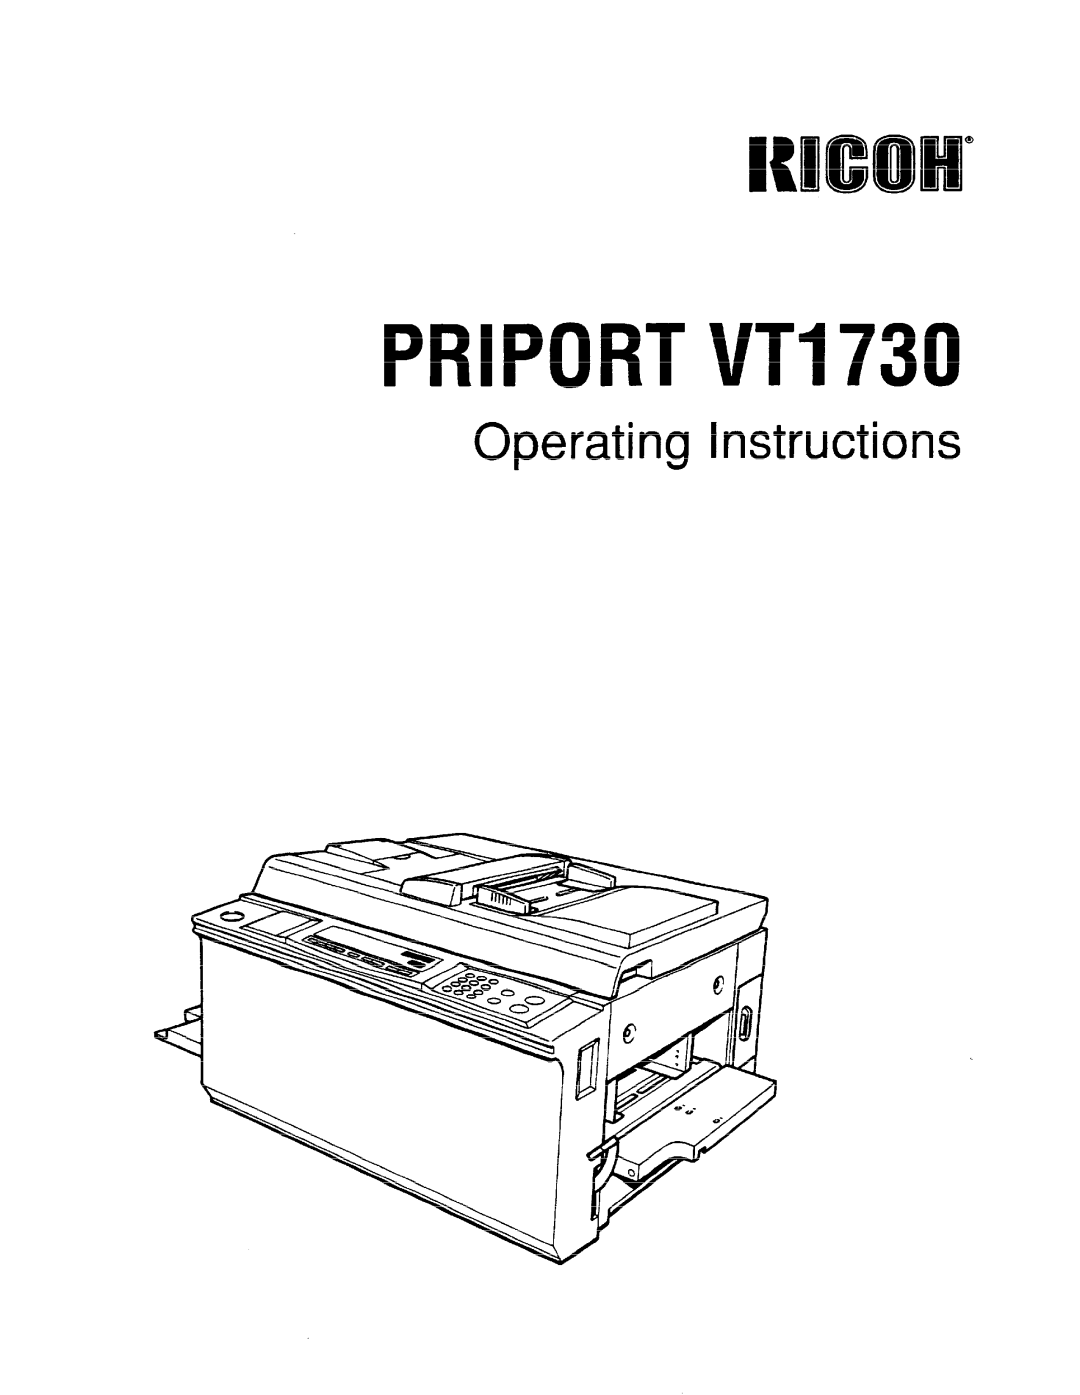 Ricoh manual PRIPORT VT1730, Operating Instructions 